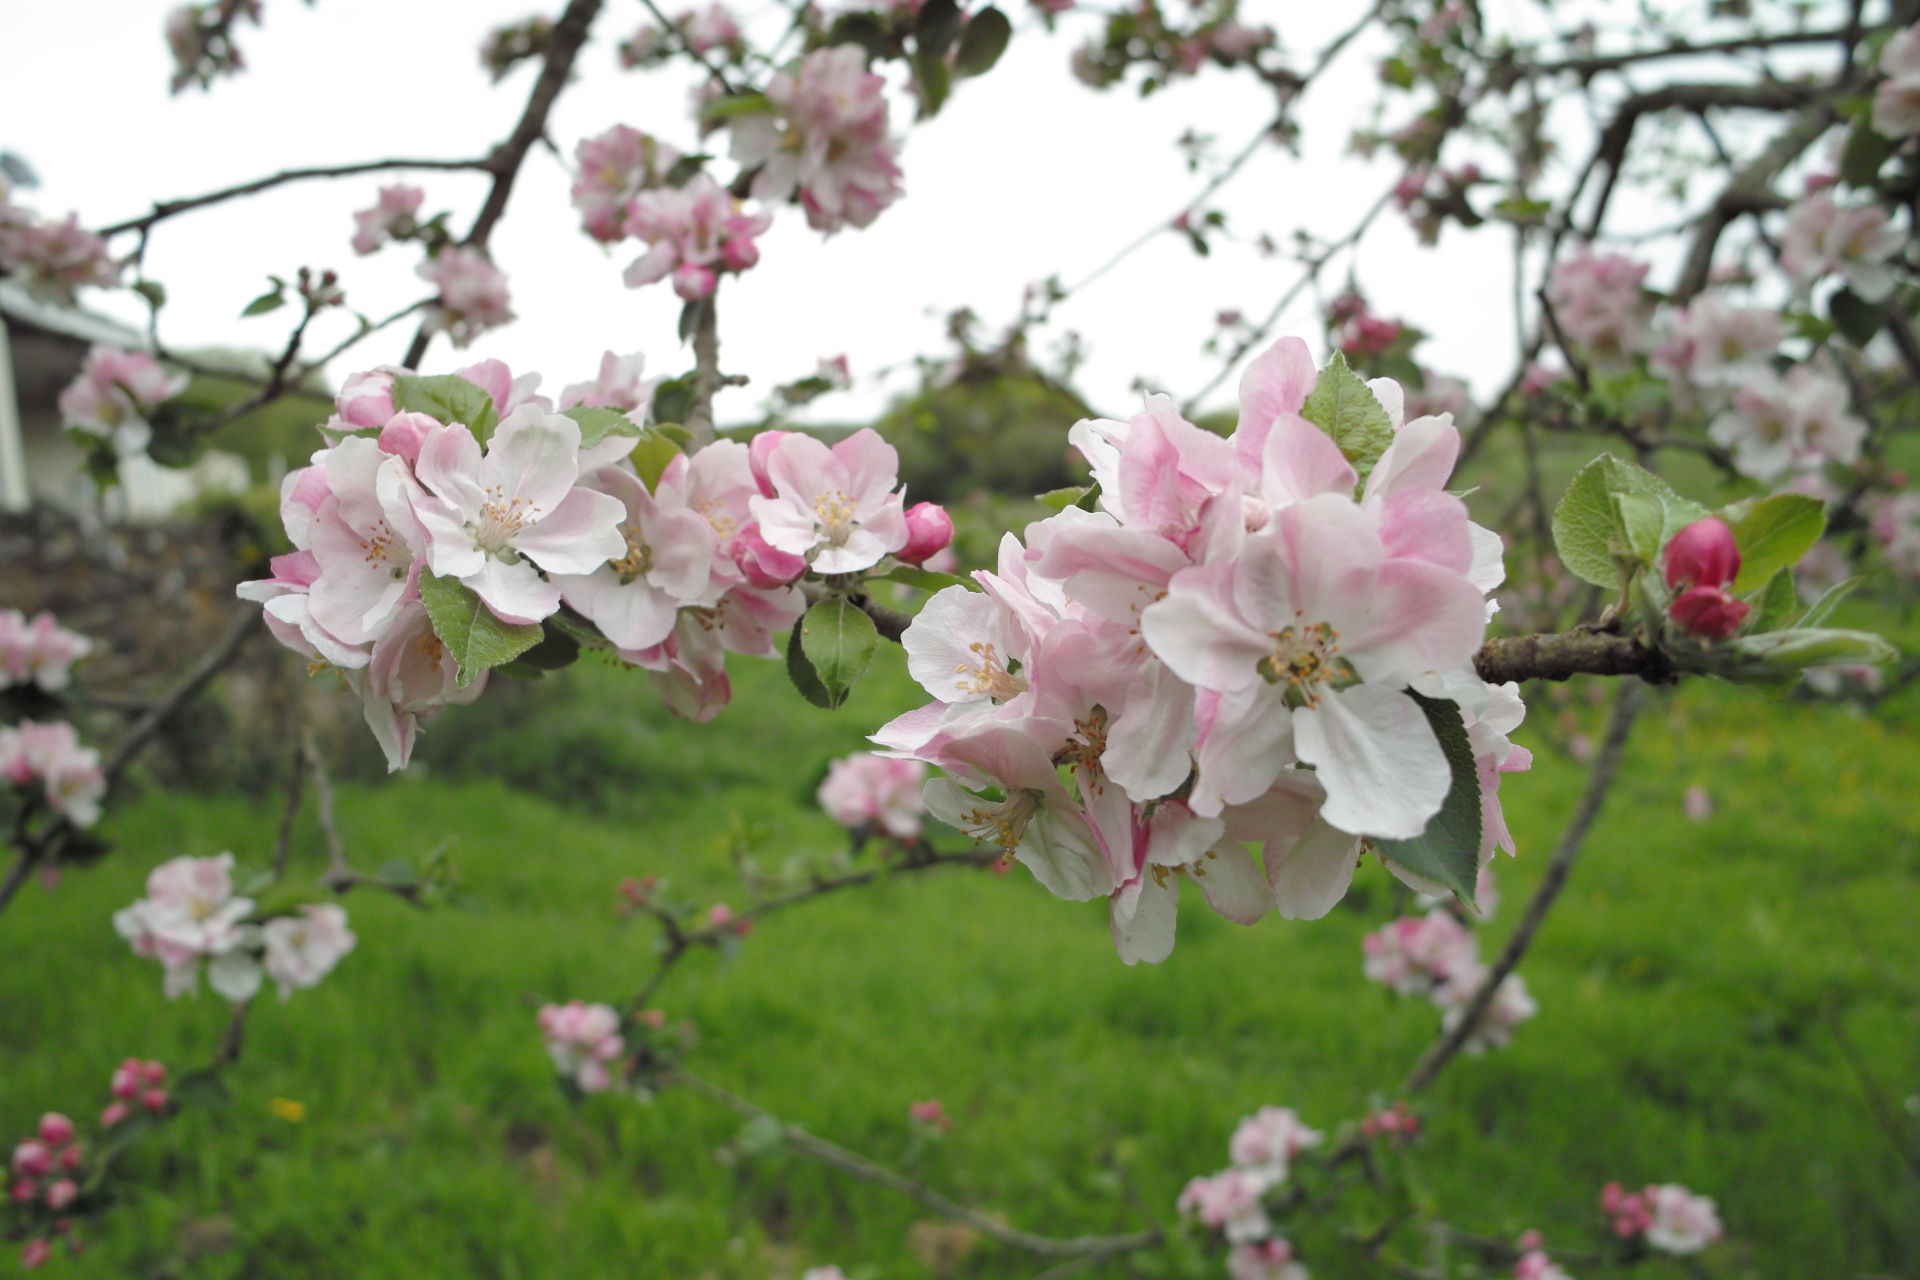 Bramley apple tree in flower